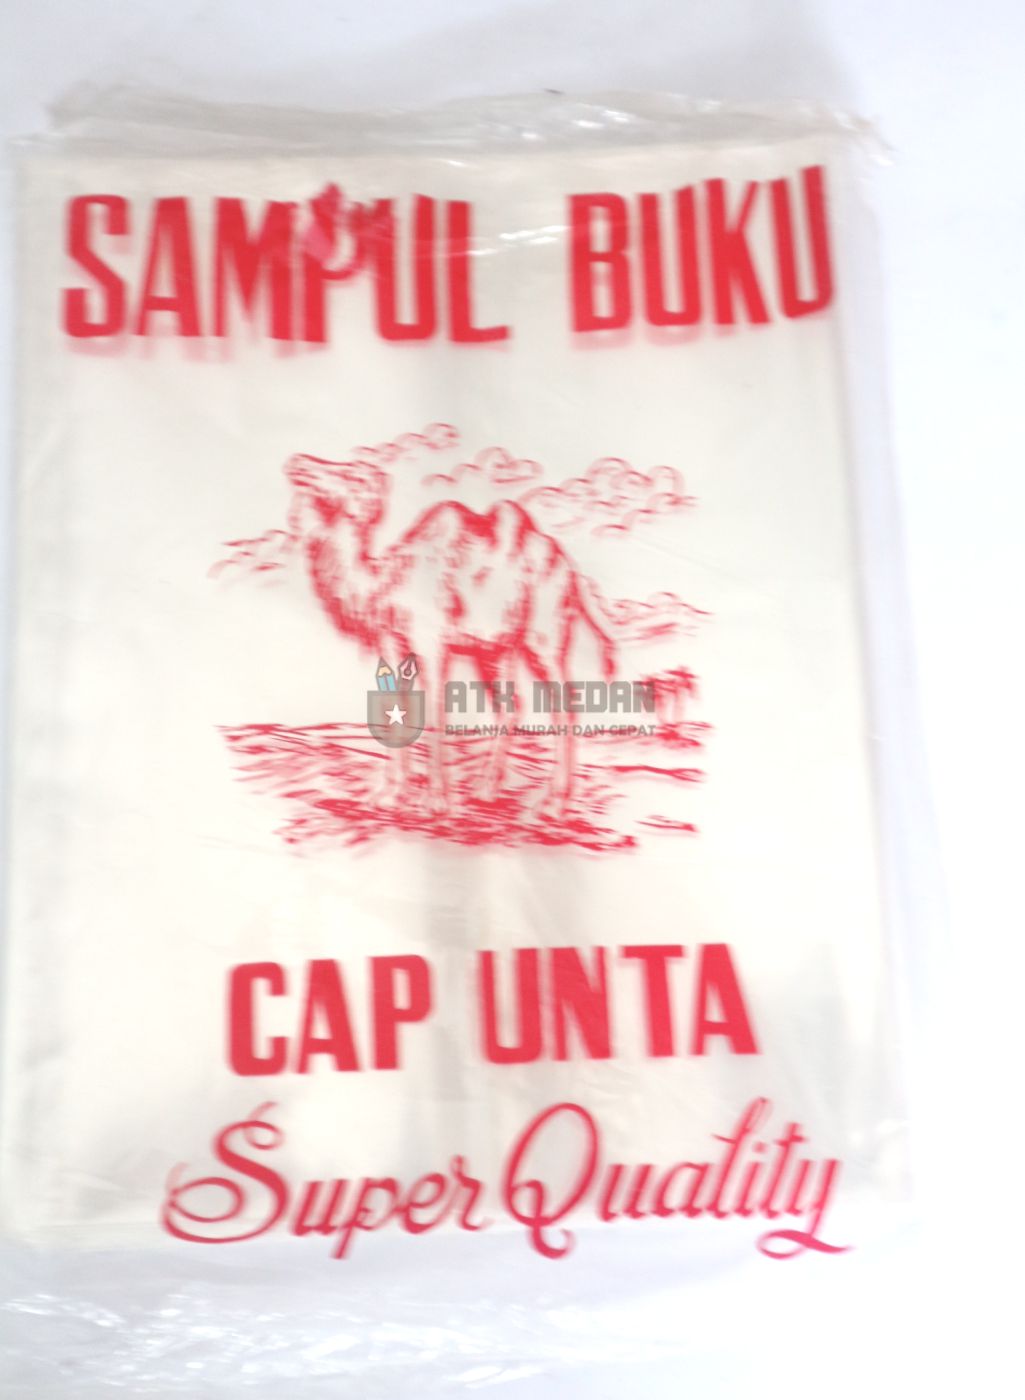 Harga Sampul  Buku  Kwarto Plastik Cap Unta di Medan ATK Medan